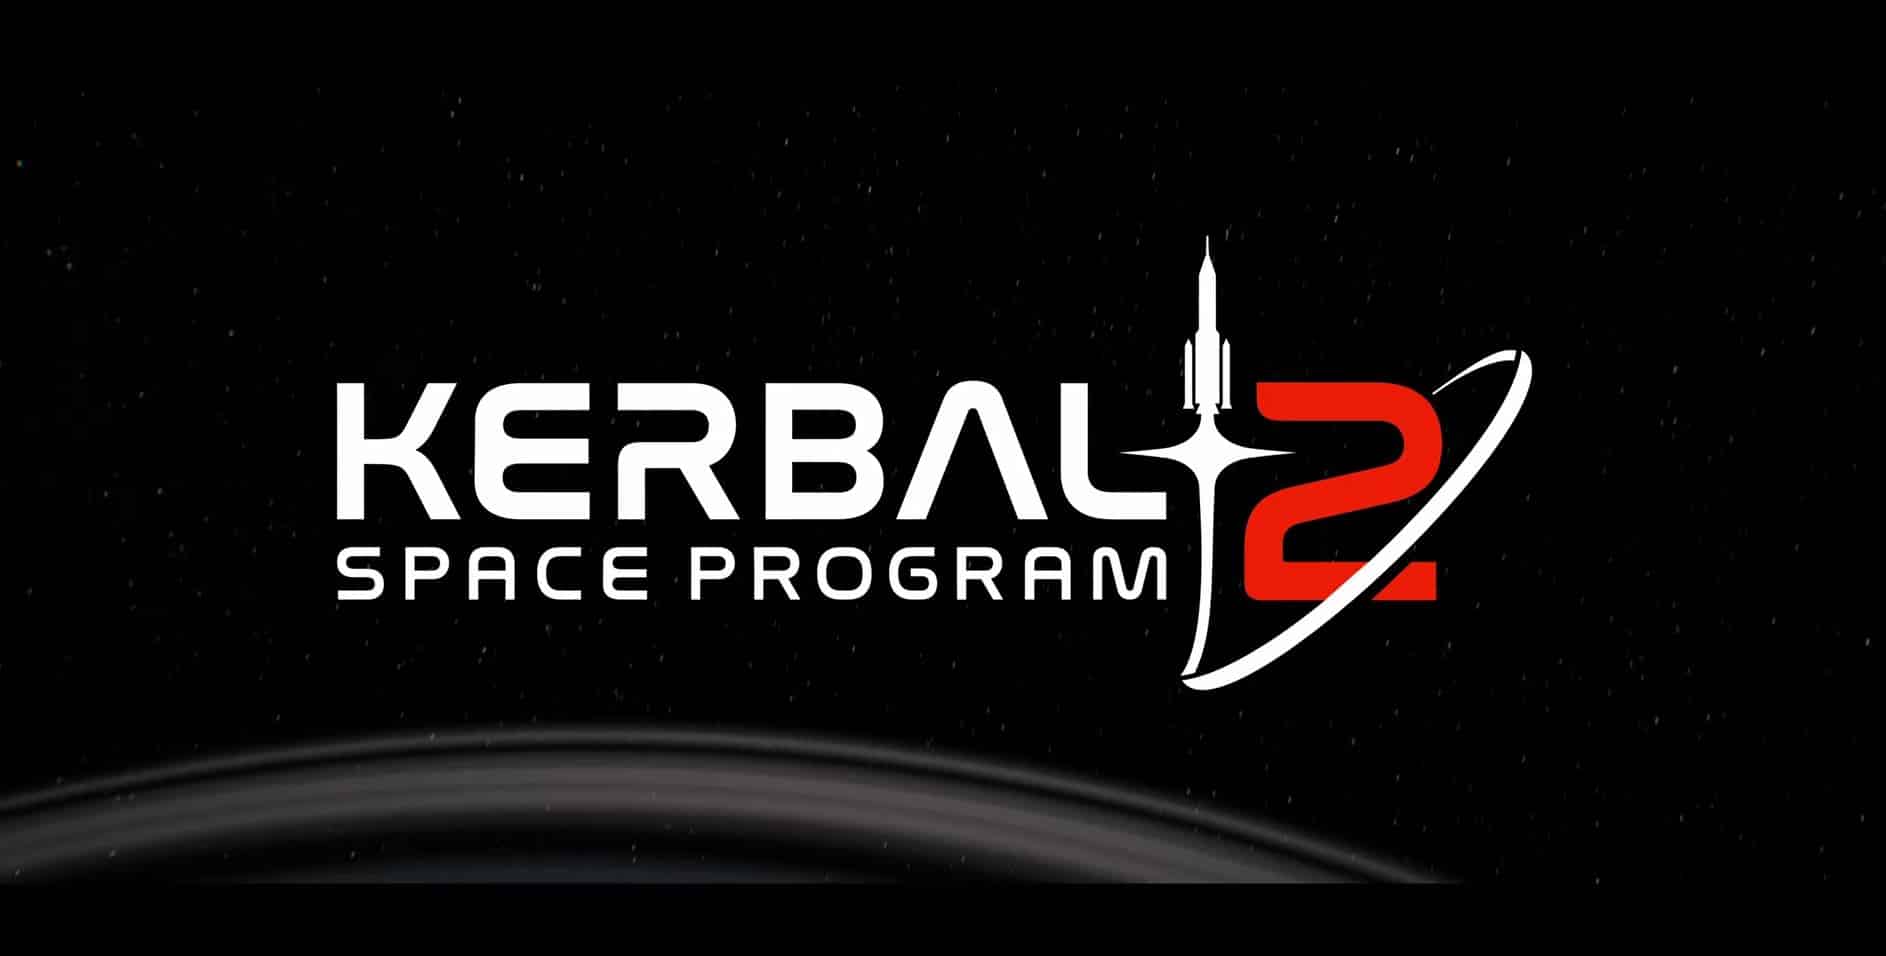 kerbal space program 2 trailer